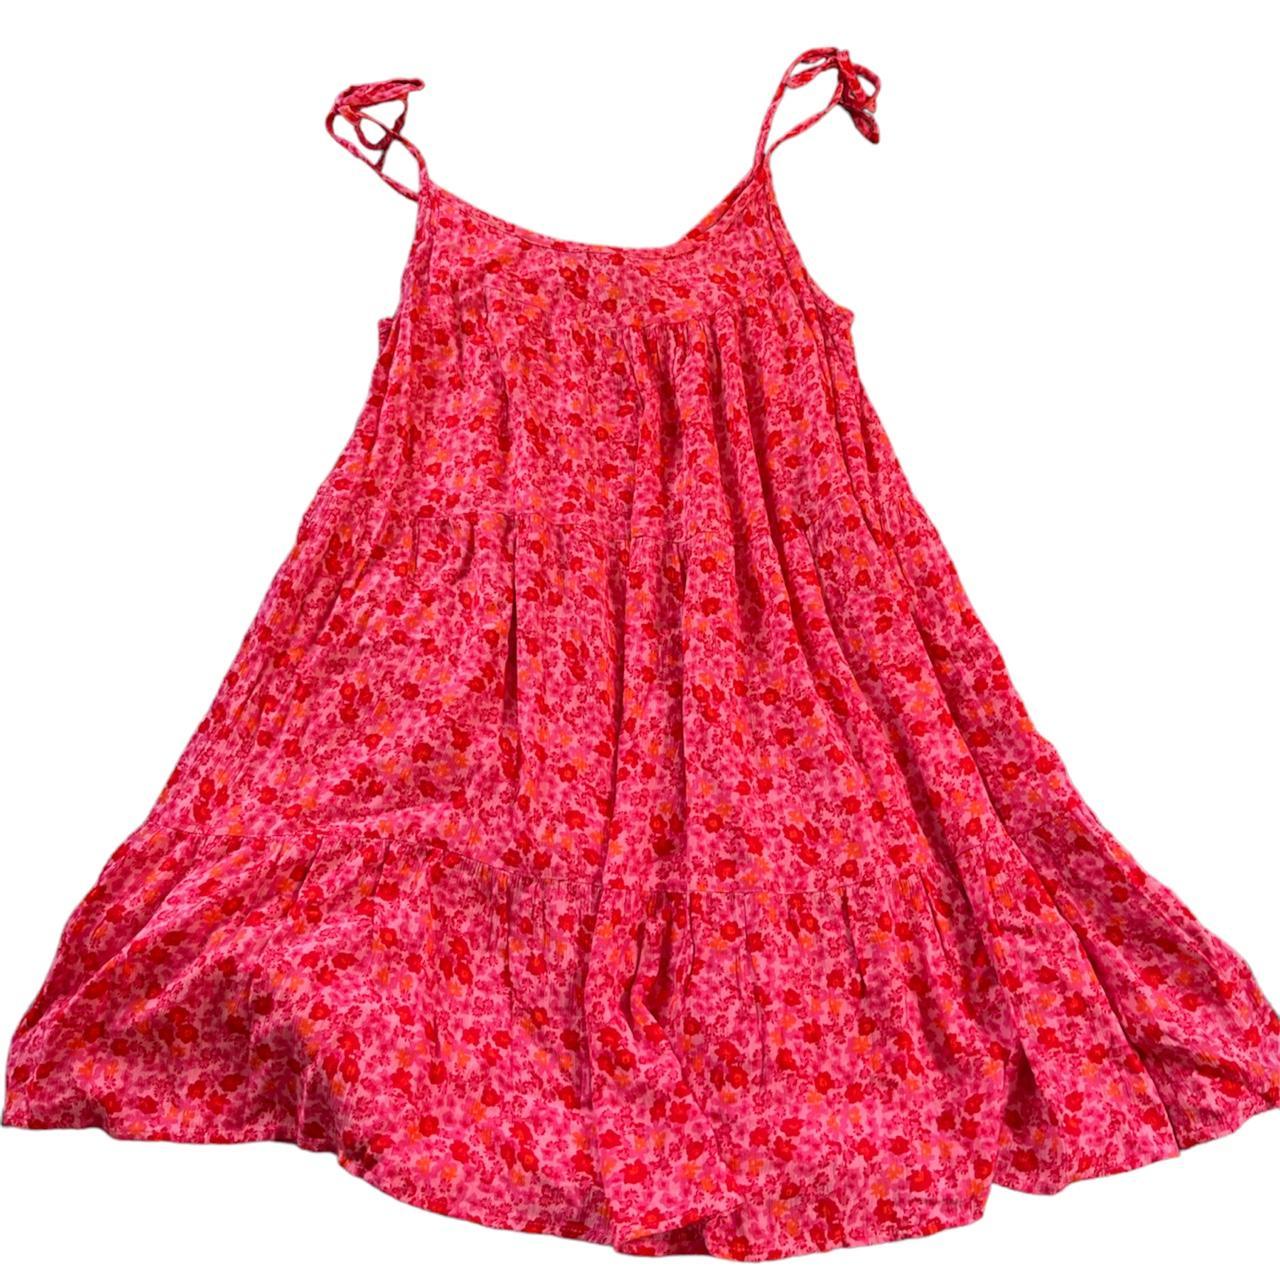 wild fable pink and orange floral summer dress size... - Depop